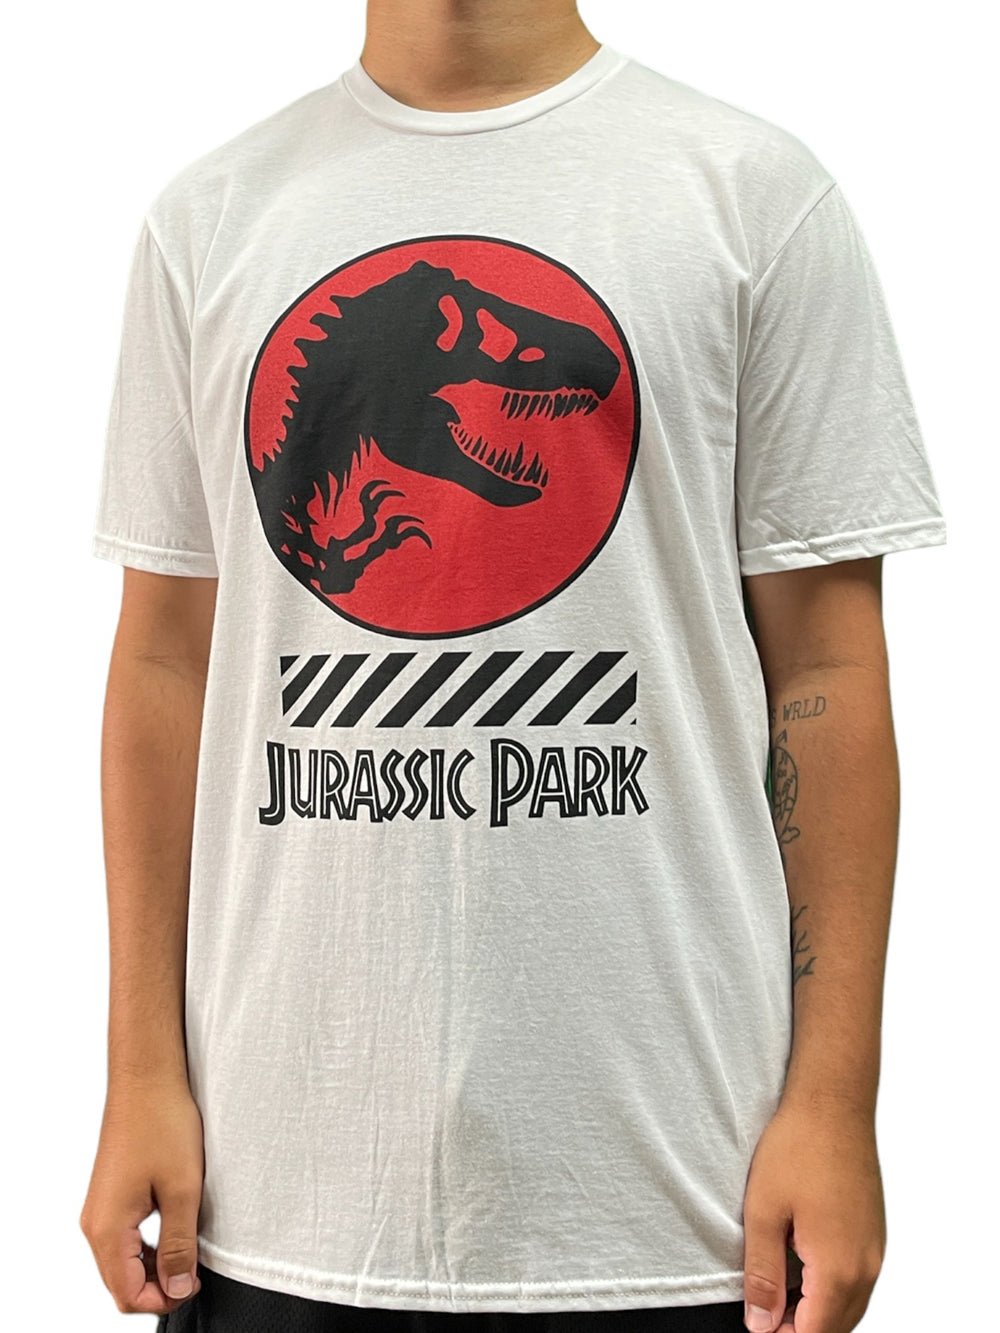 Jurassic Park T.REX WARNING Unisex Official T Shirt Brand New Various Sizes TV Film Movie